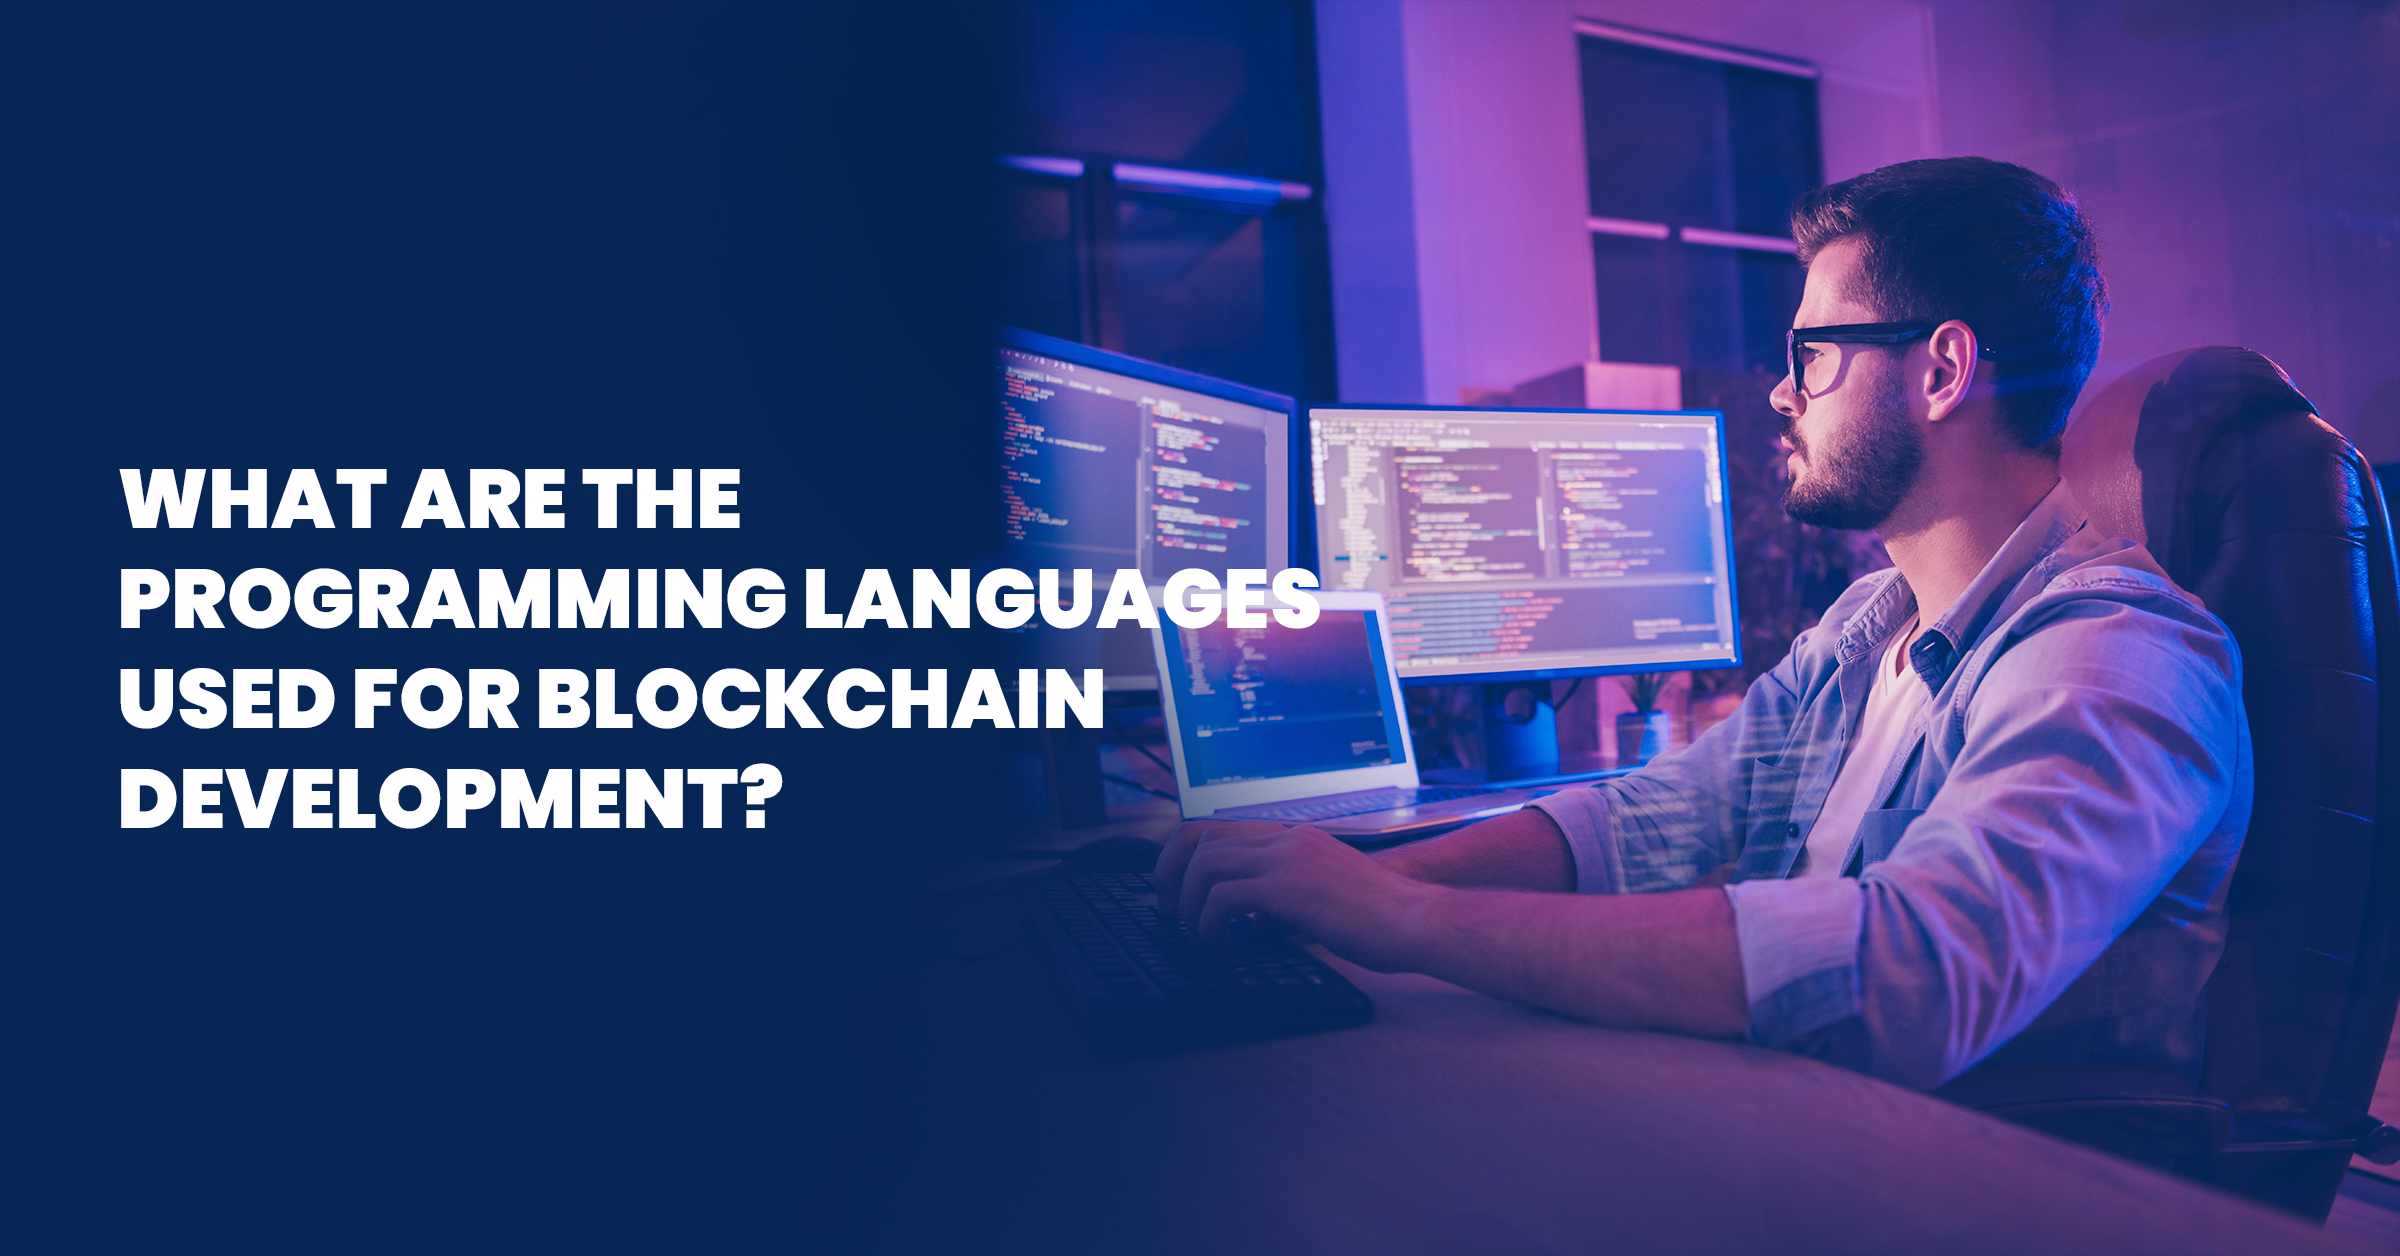 blockchain development | What are the programming languages used for blockchain development? | programming languages used for blockchain